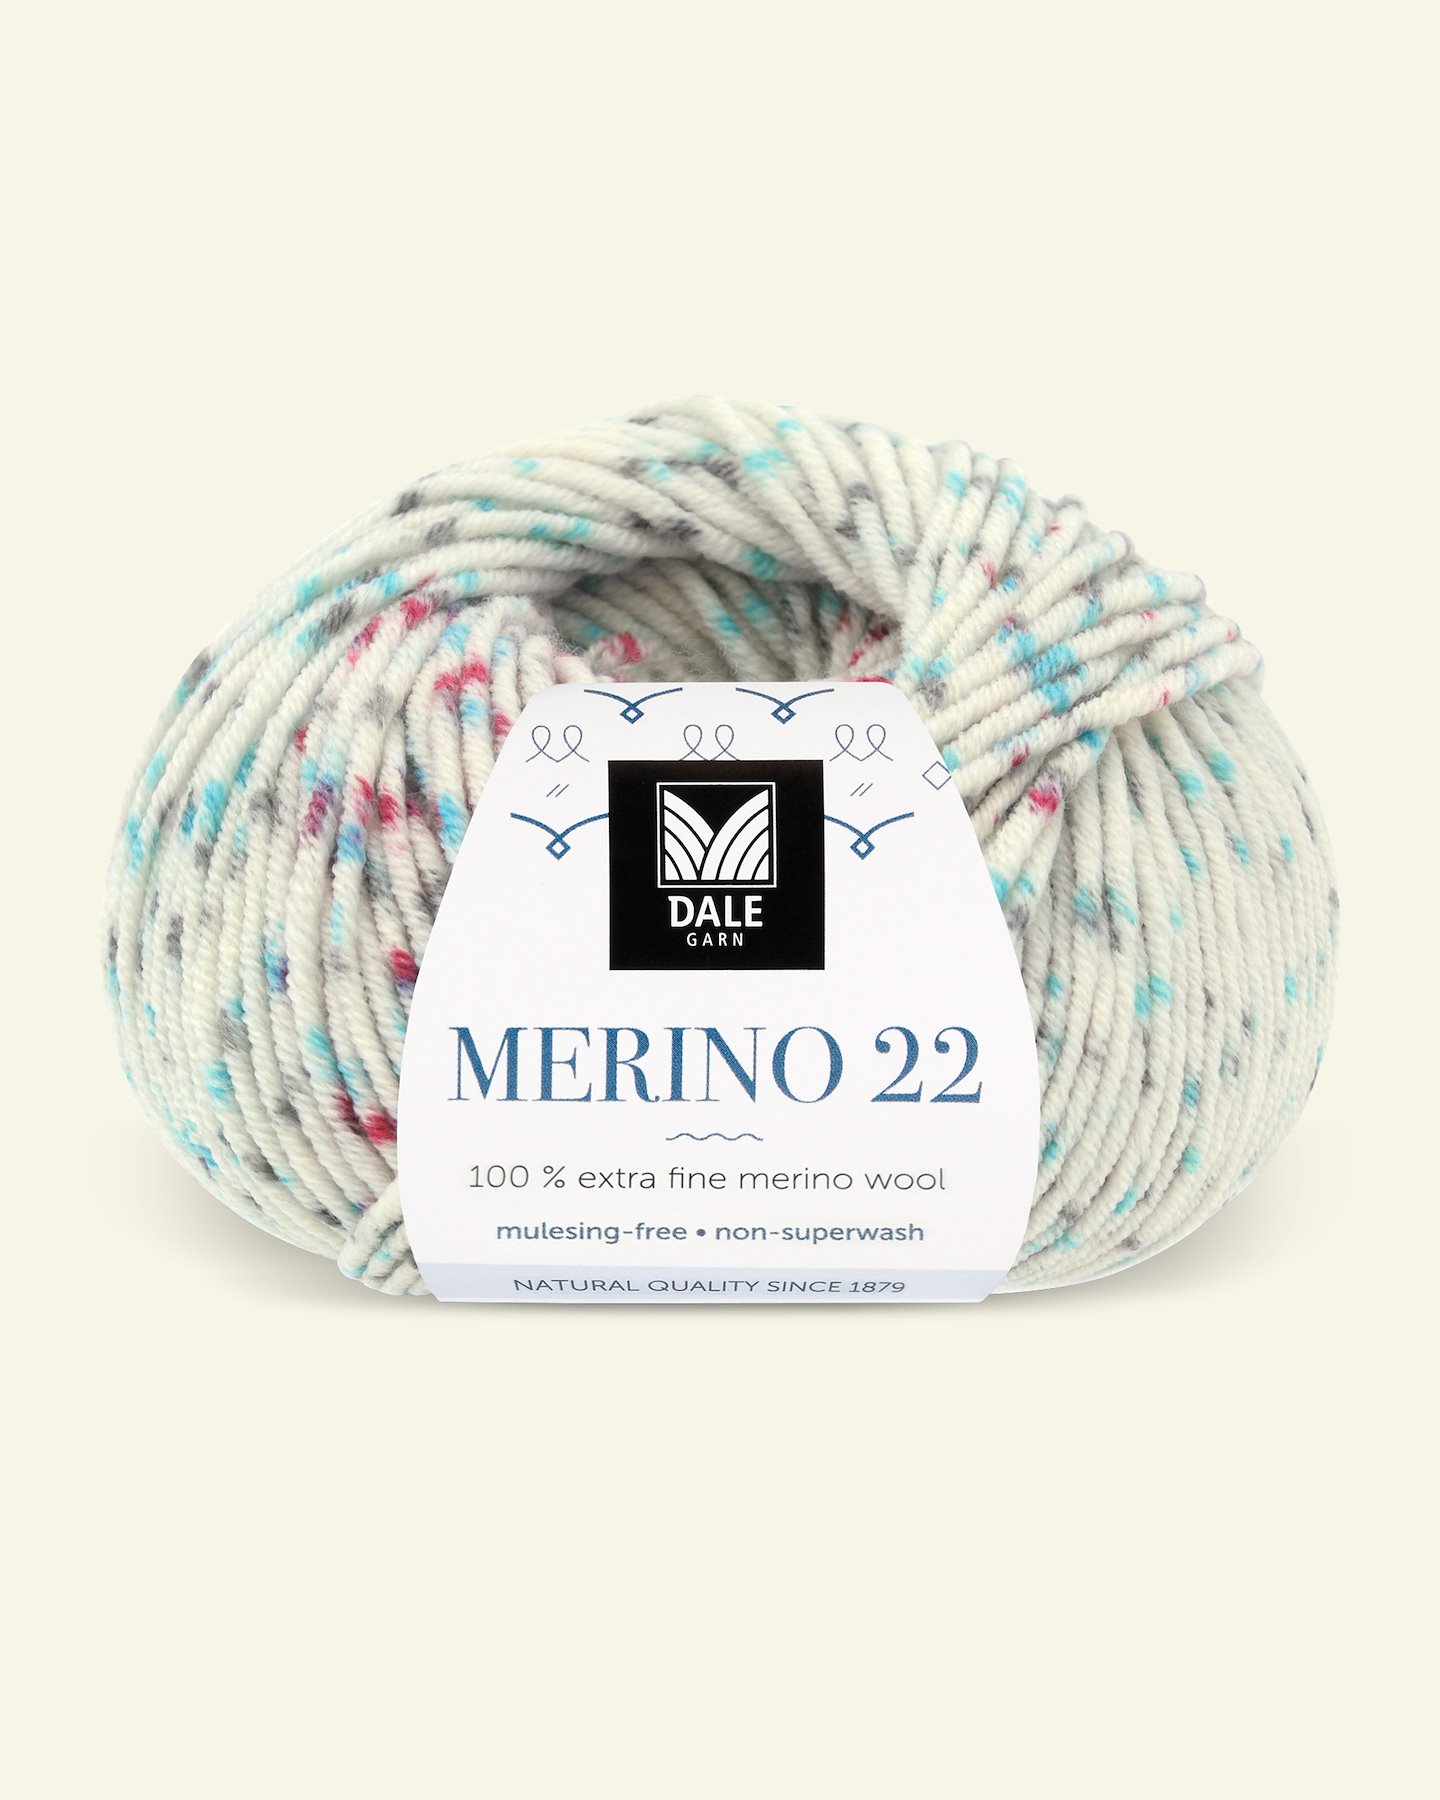 Dale Garn, 100% extra fine merino wool yarn "Merino 22", tuttifrutti 90001220_pack